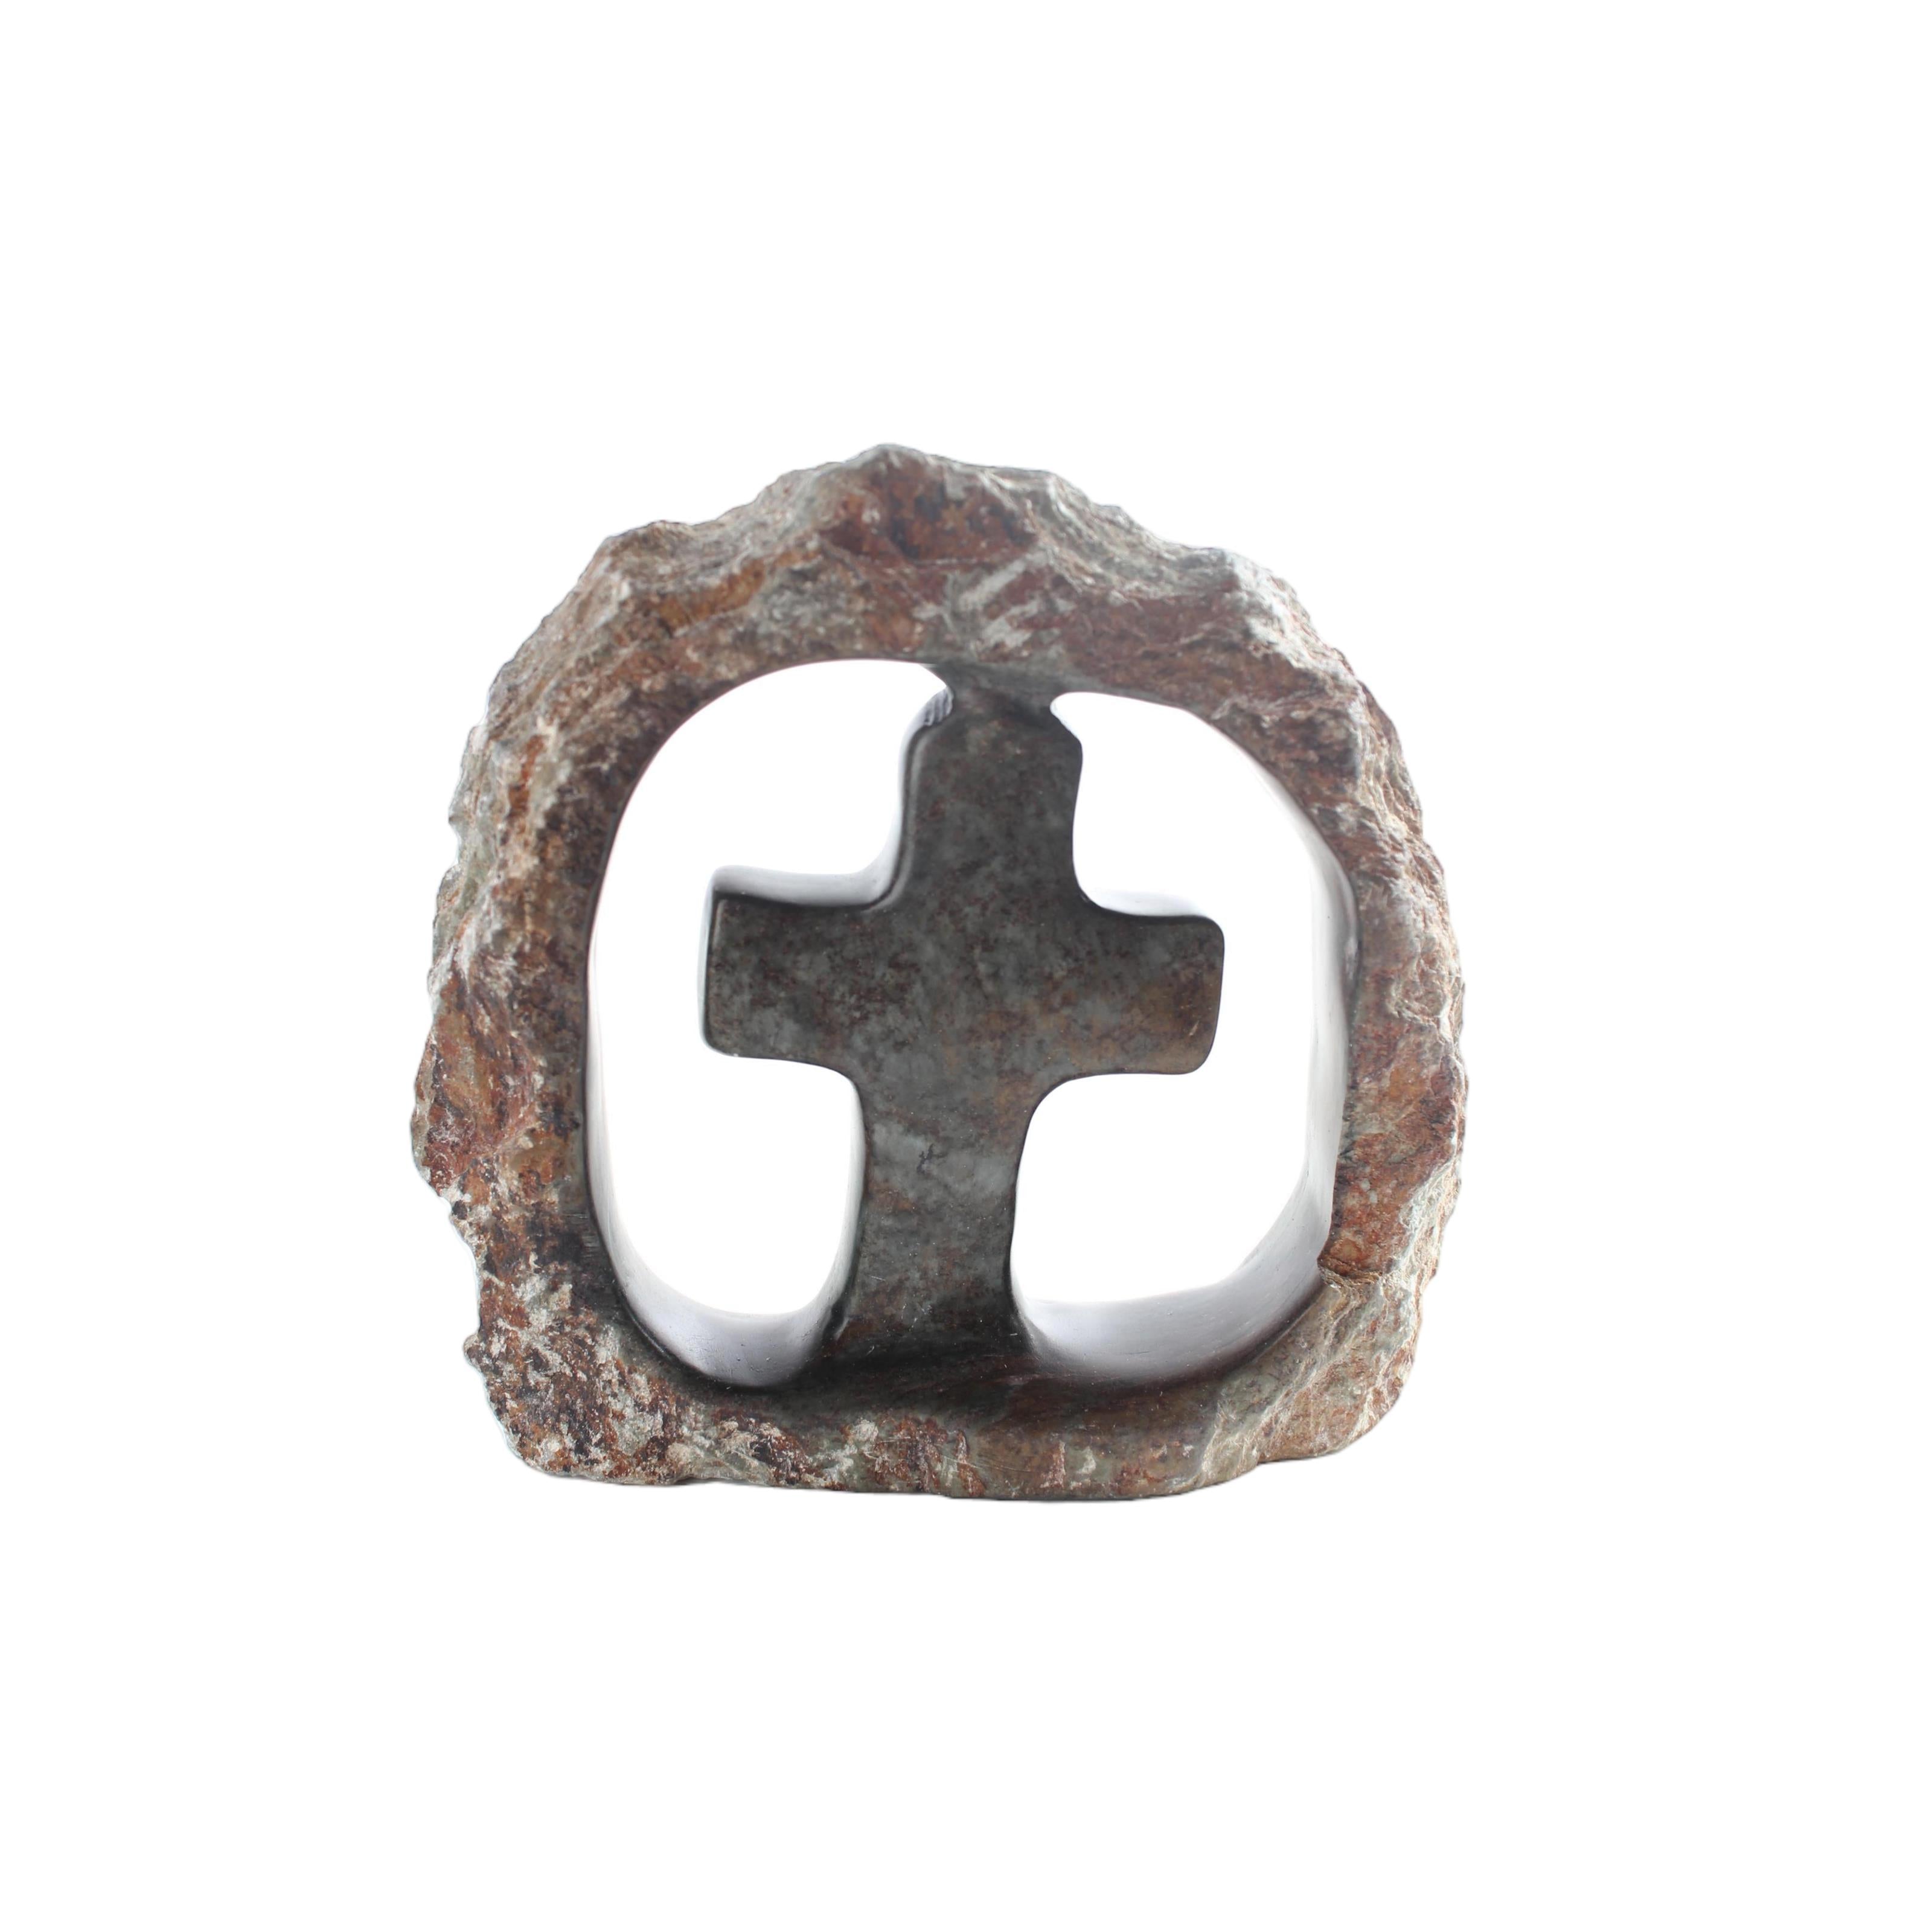 Shona Tribe Serpentine Stone Crosses  ~5.5" Tall - Crosses